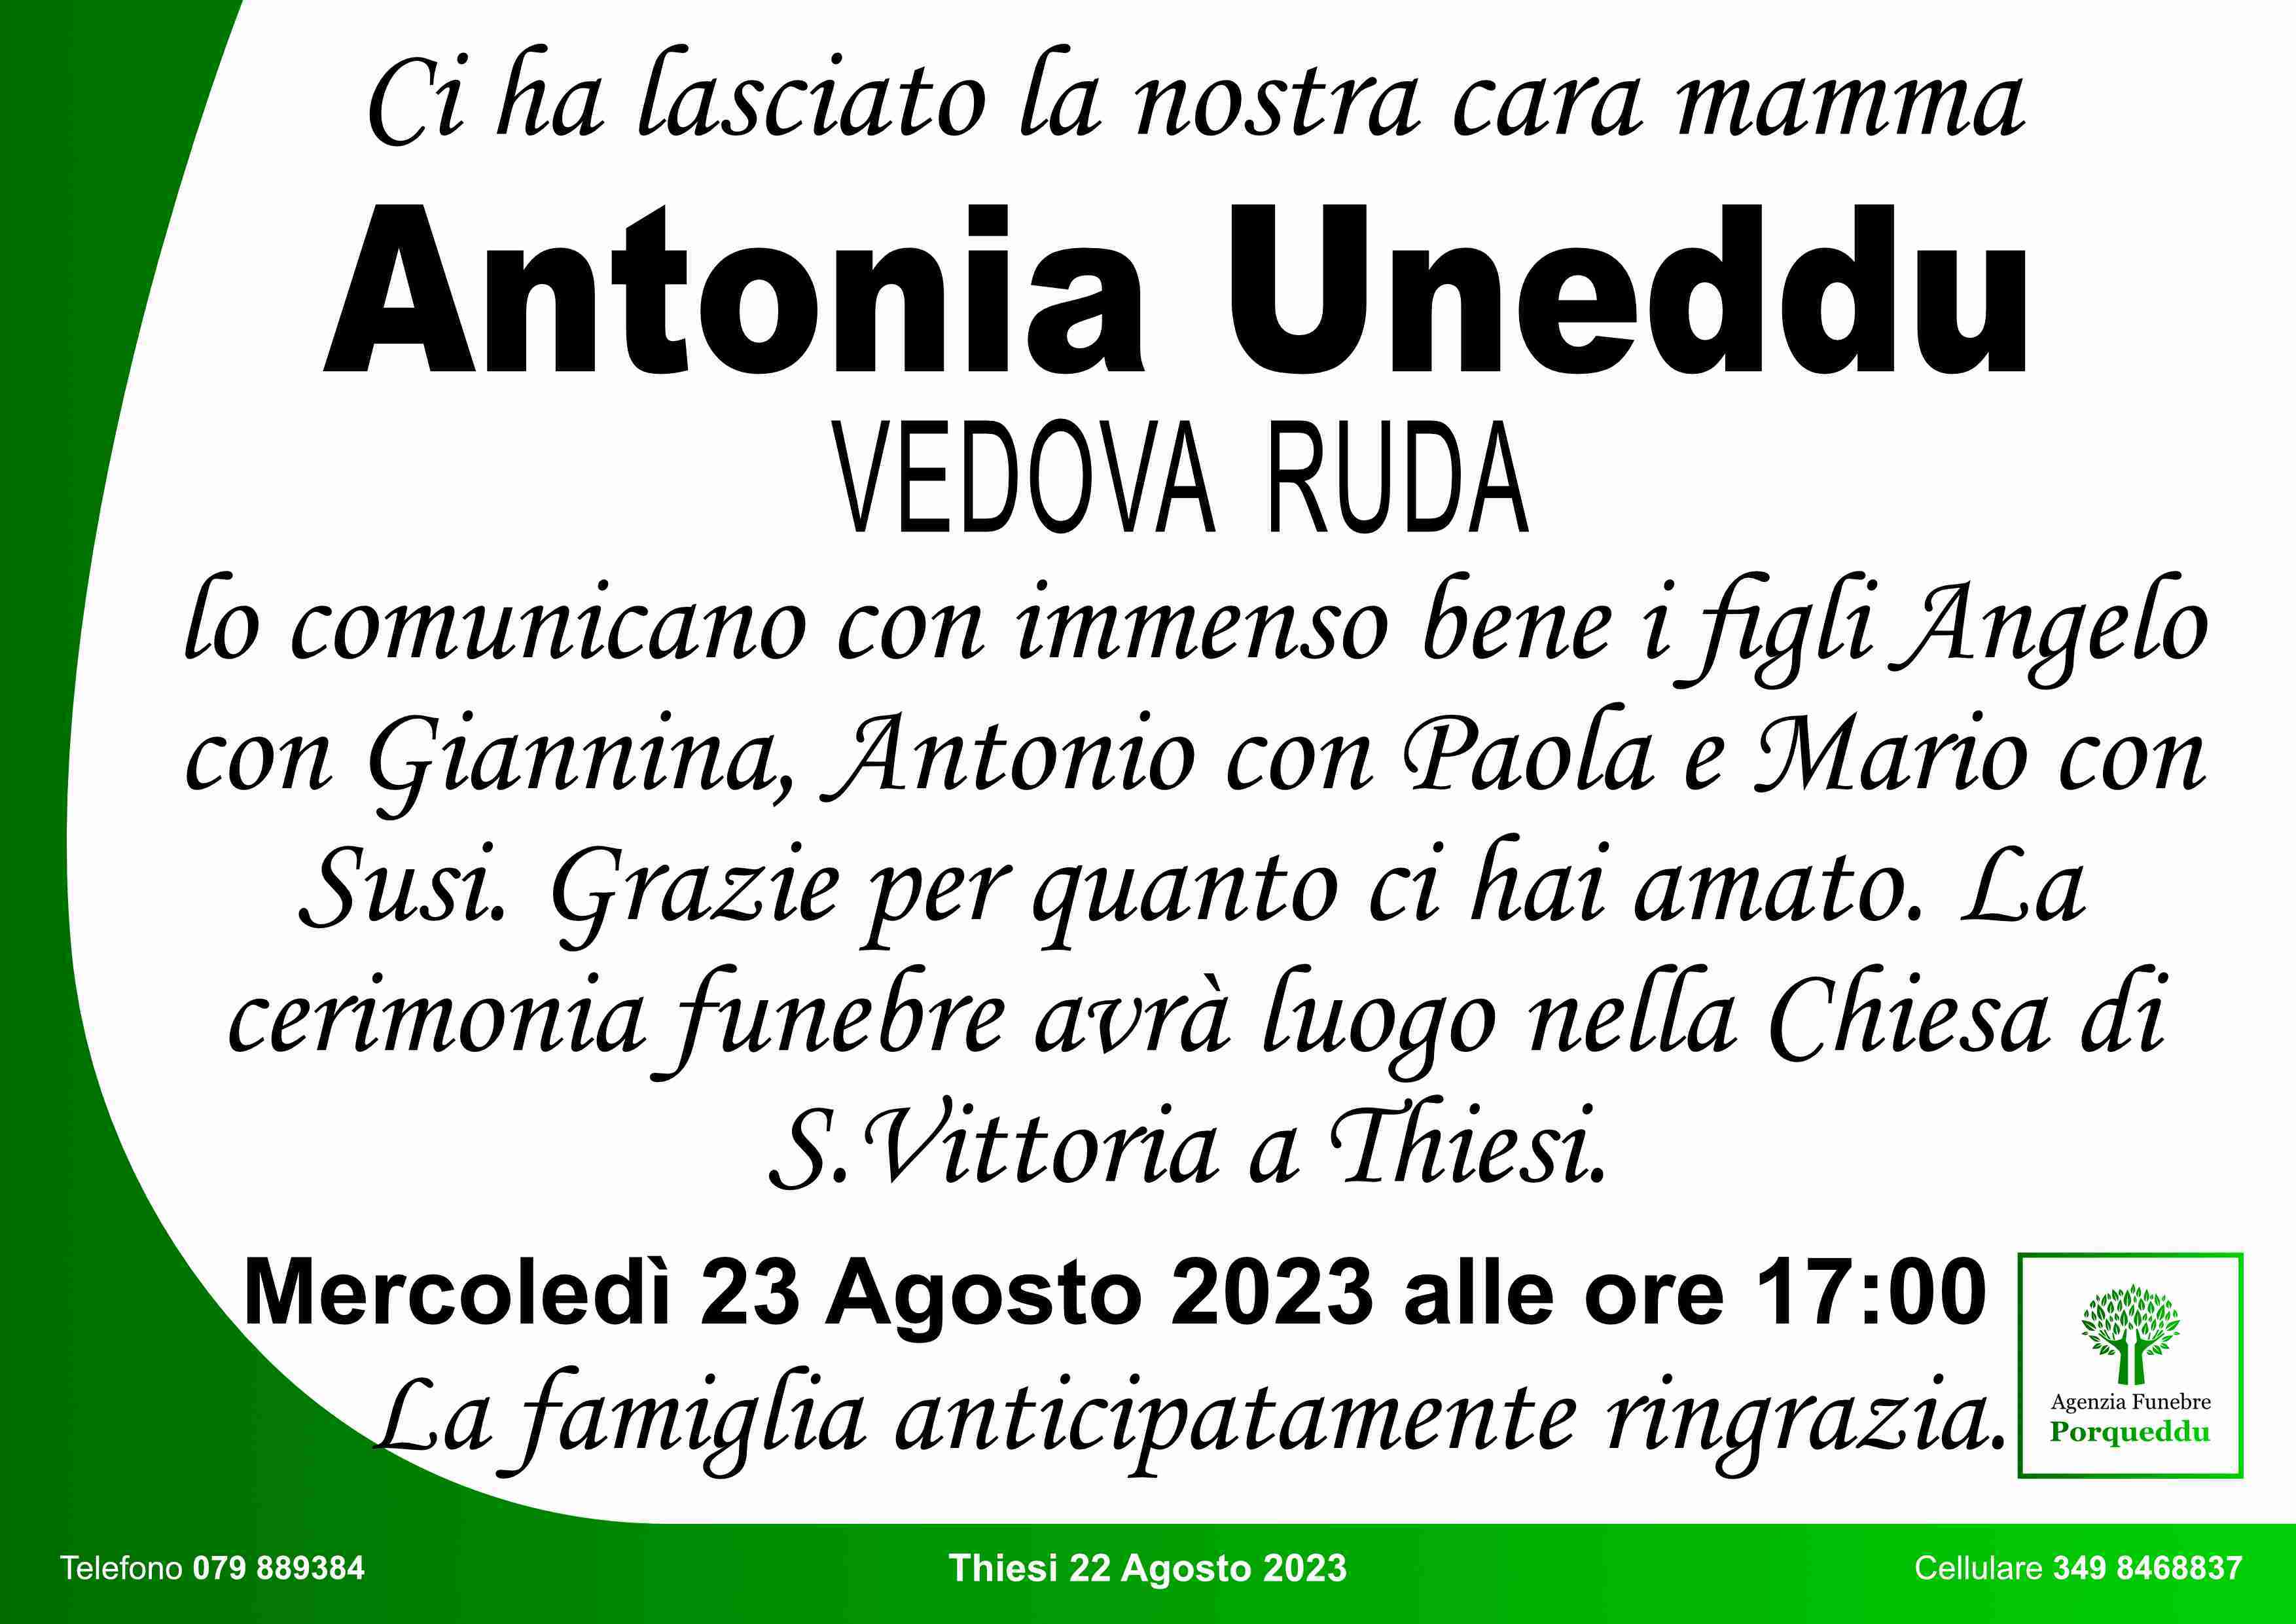 Antonia Uneddu